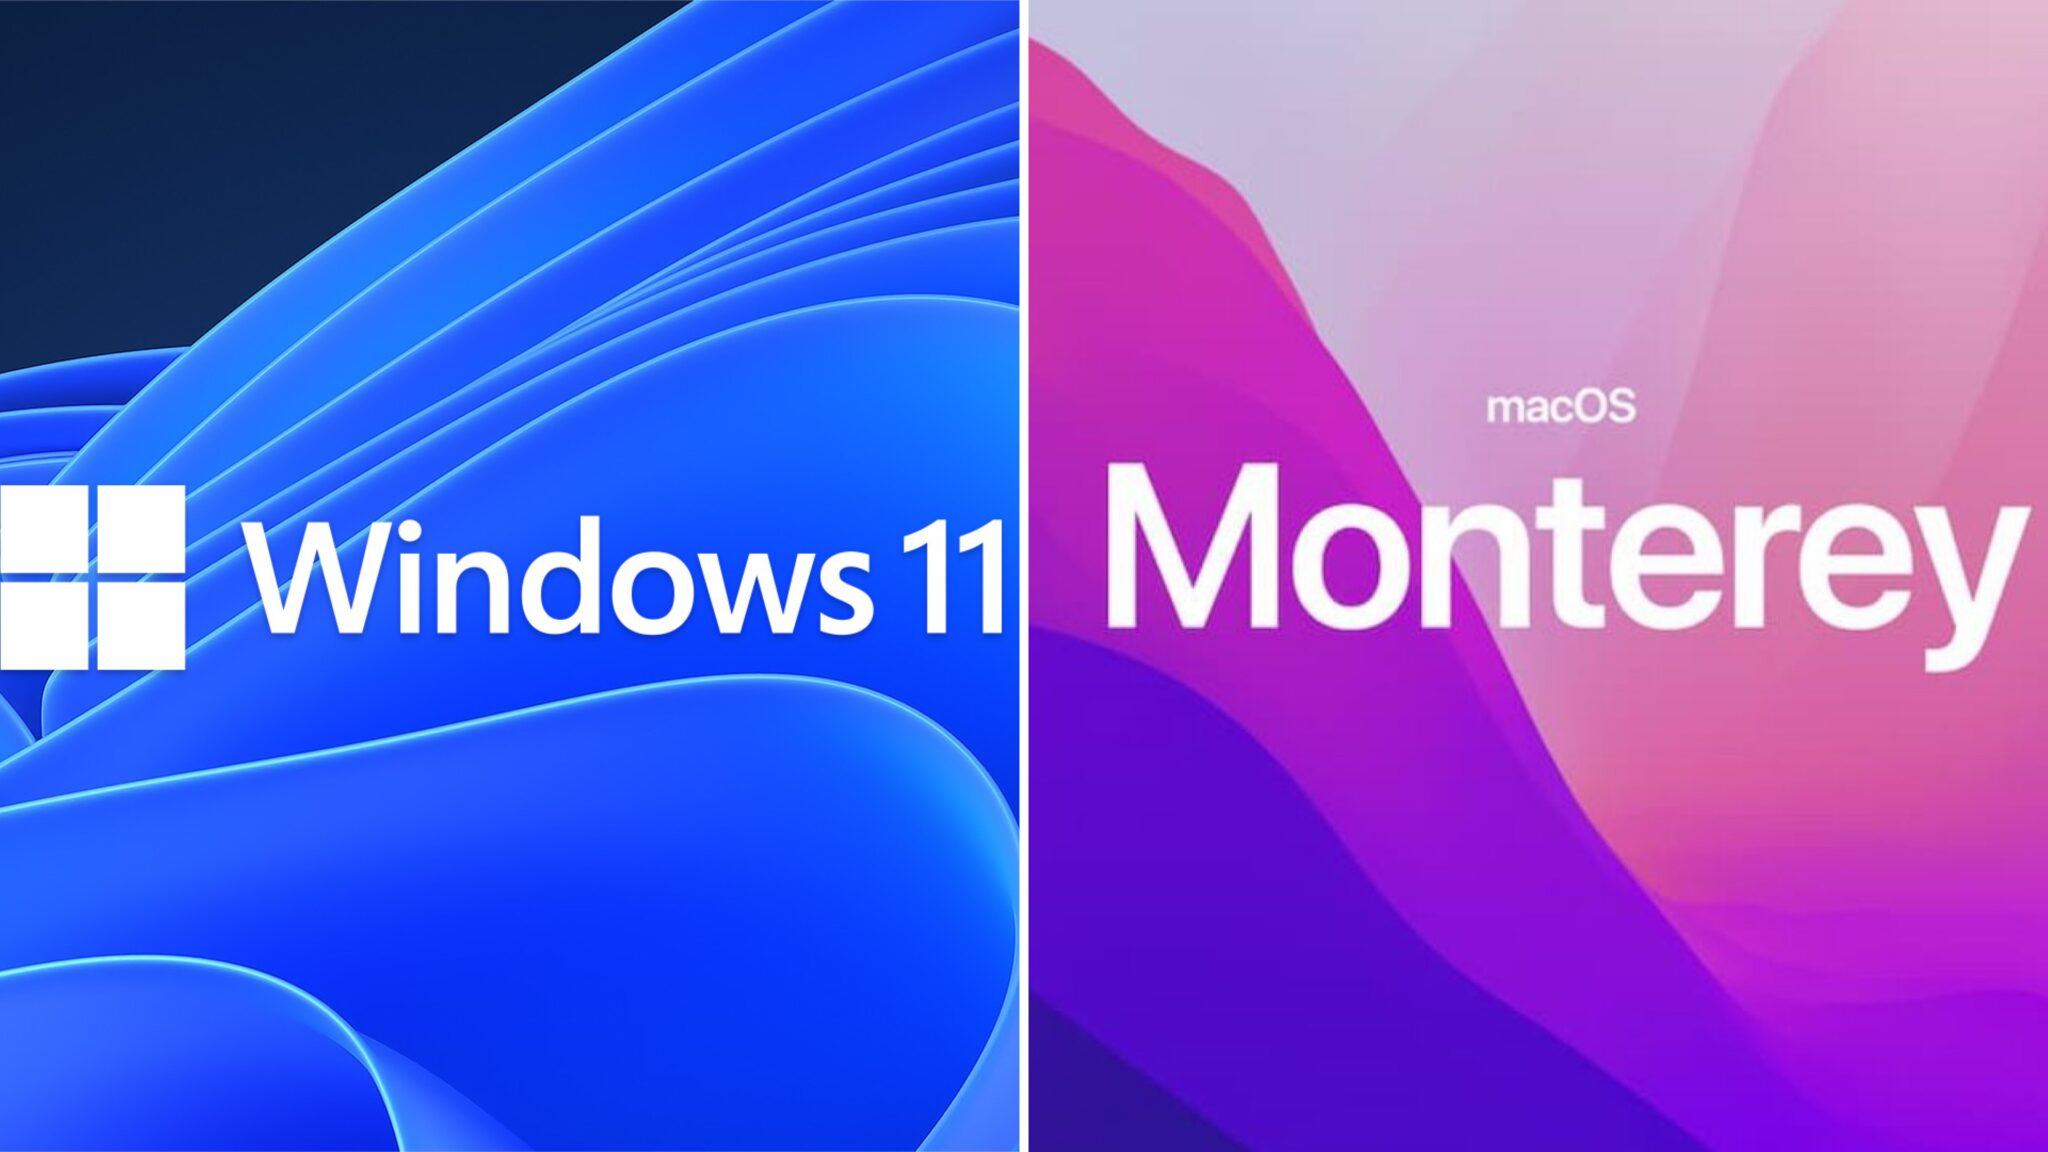 Windows 11 vs macOS Monterey. Who has the better upgrade?